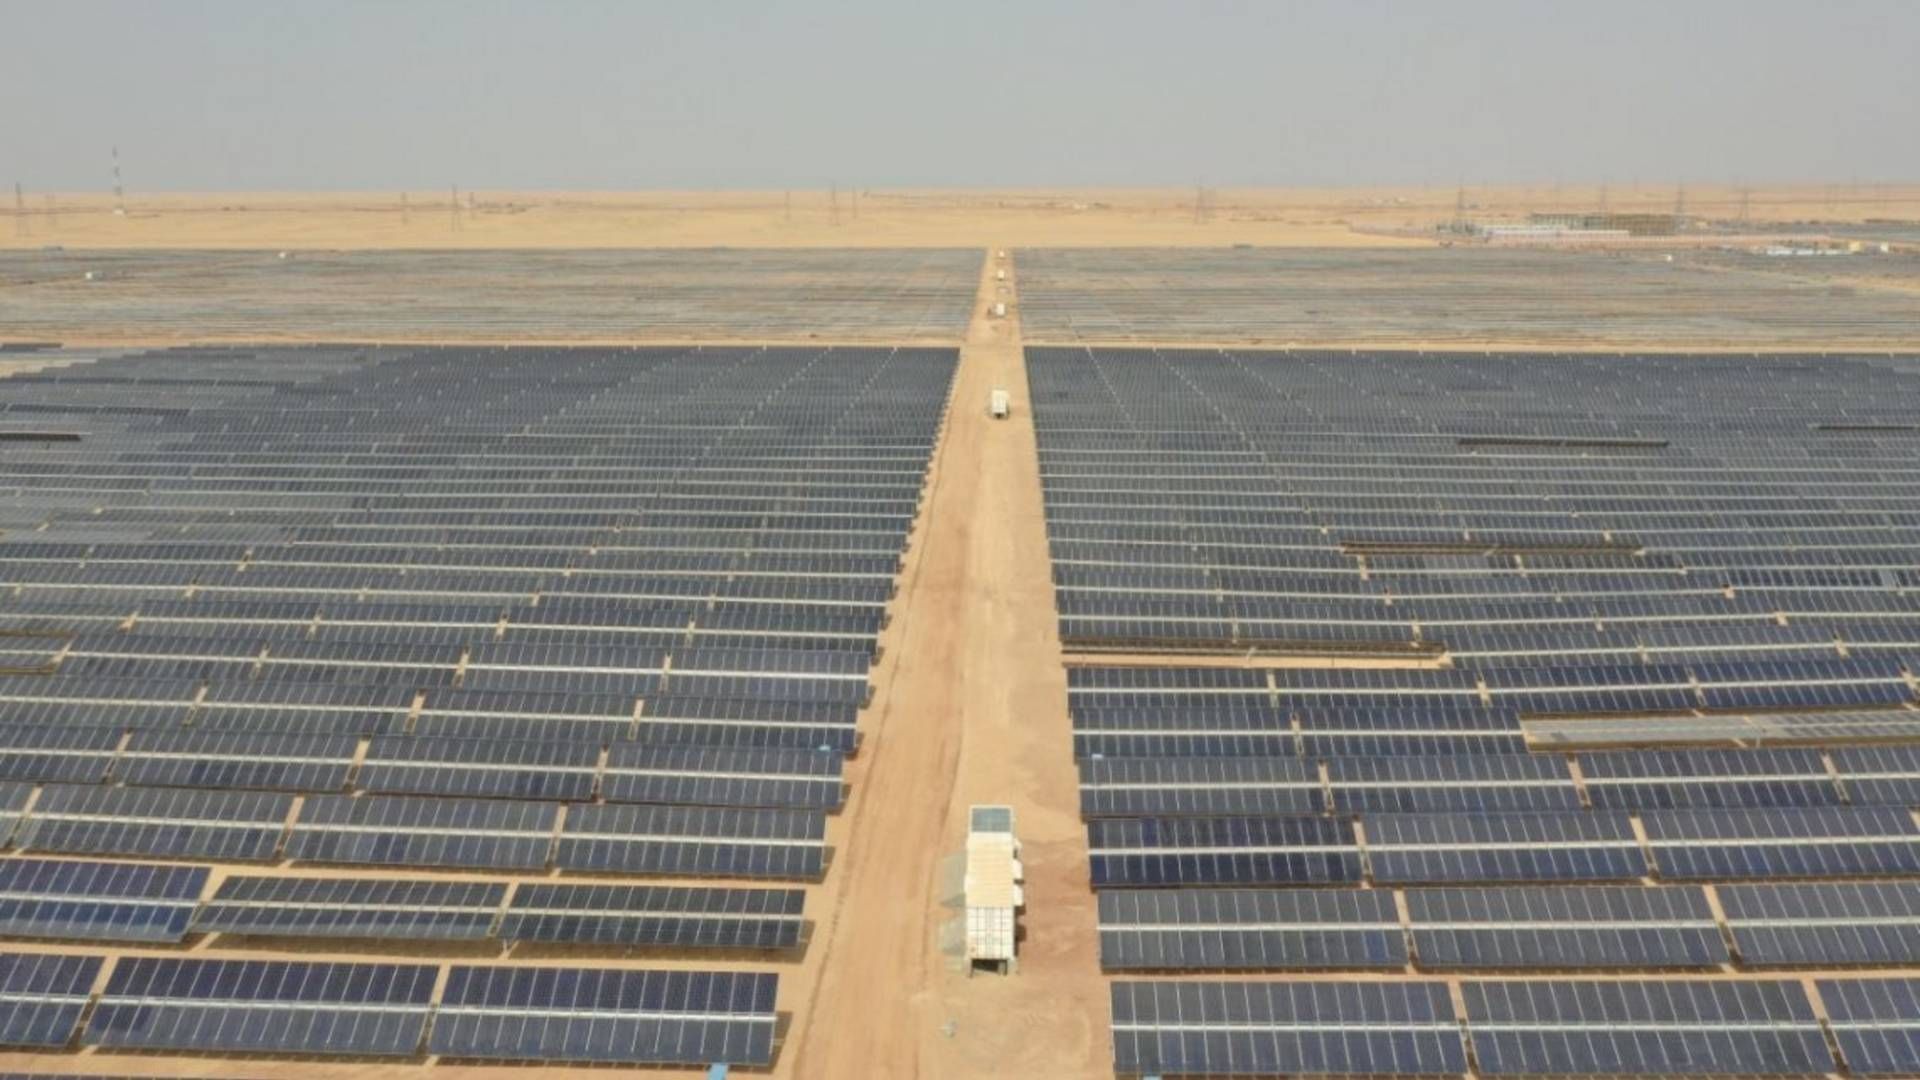 Egyptiske Ben Ban på 390 MW er den største solcellepark i Scatec Solars portefølje. | Photo: PR / Scatec Solar